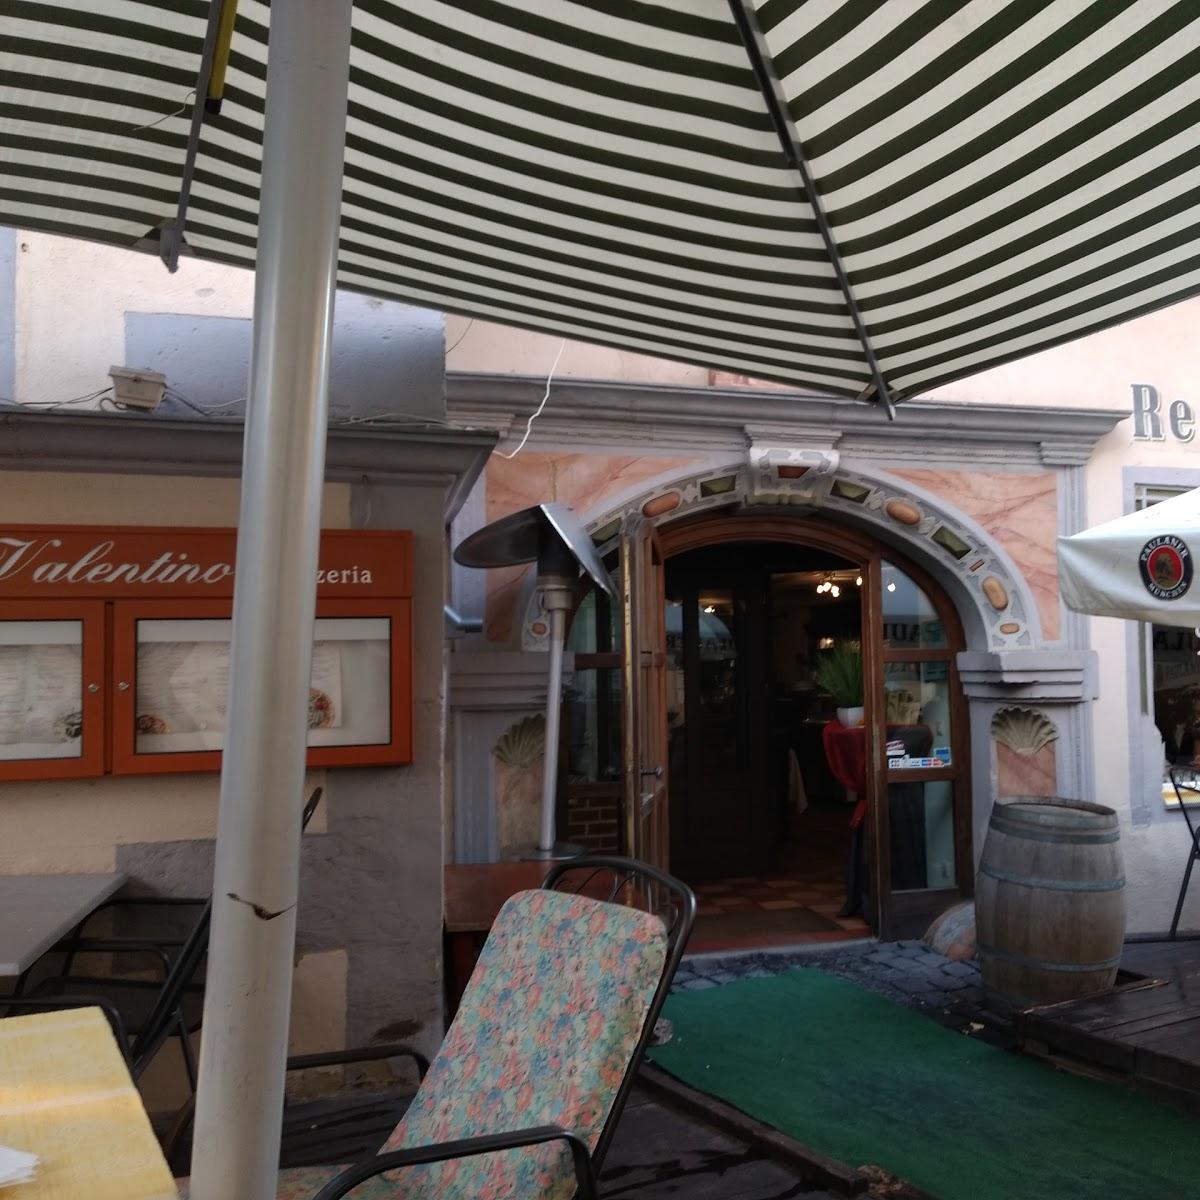 Restaurant "Ristorante Valentino" in Gotha